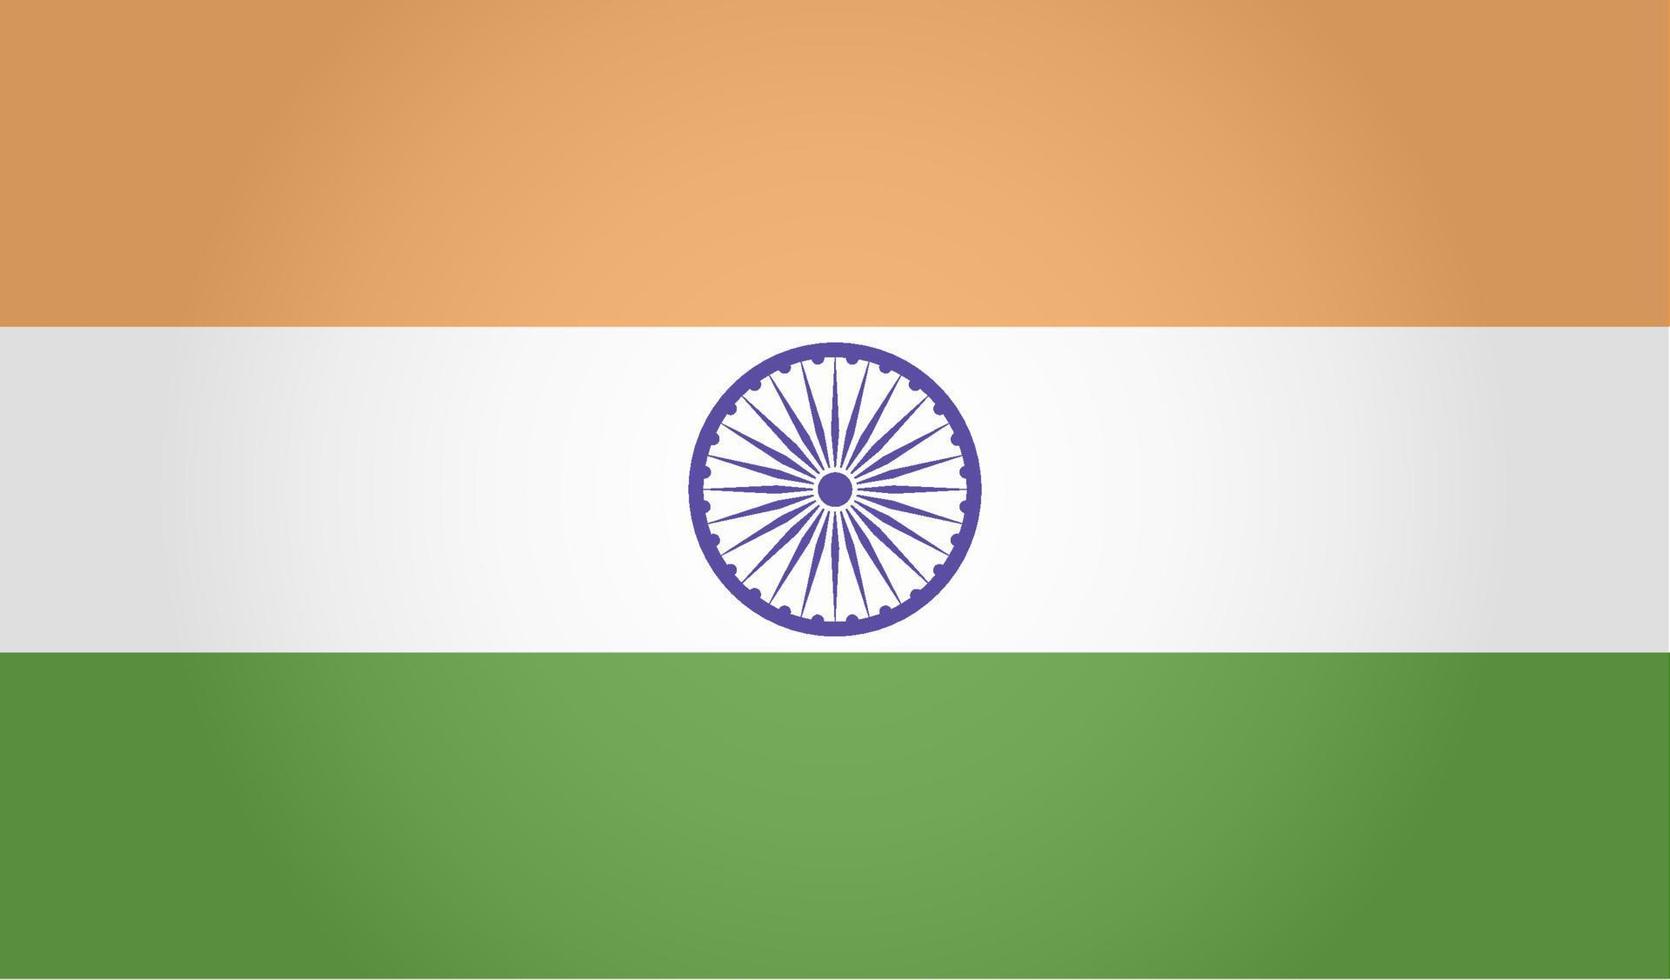 nationell flagga av Indien. vit bakgrund. vektor illustration. eps 10